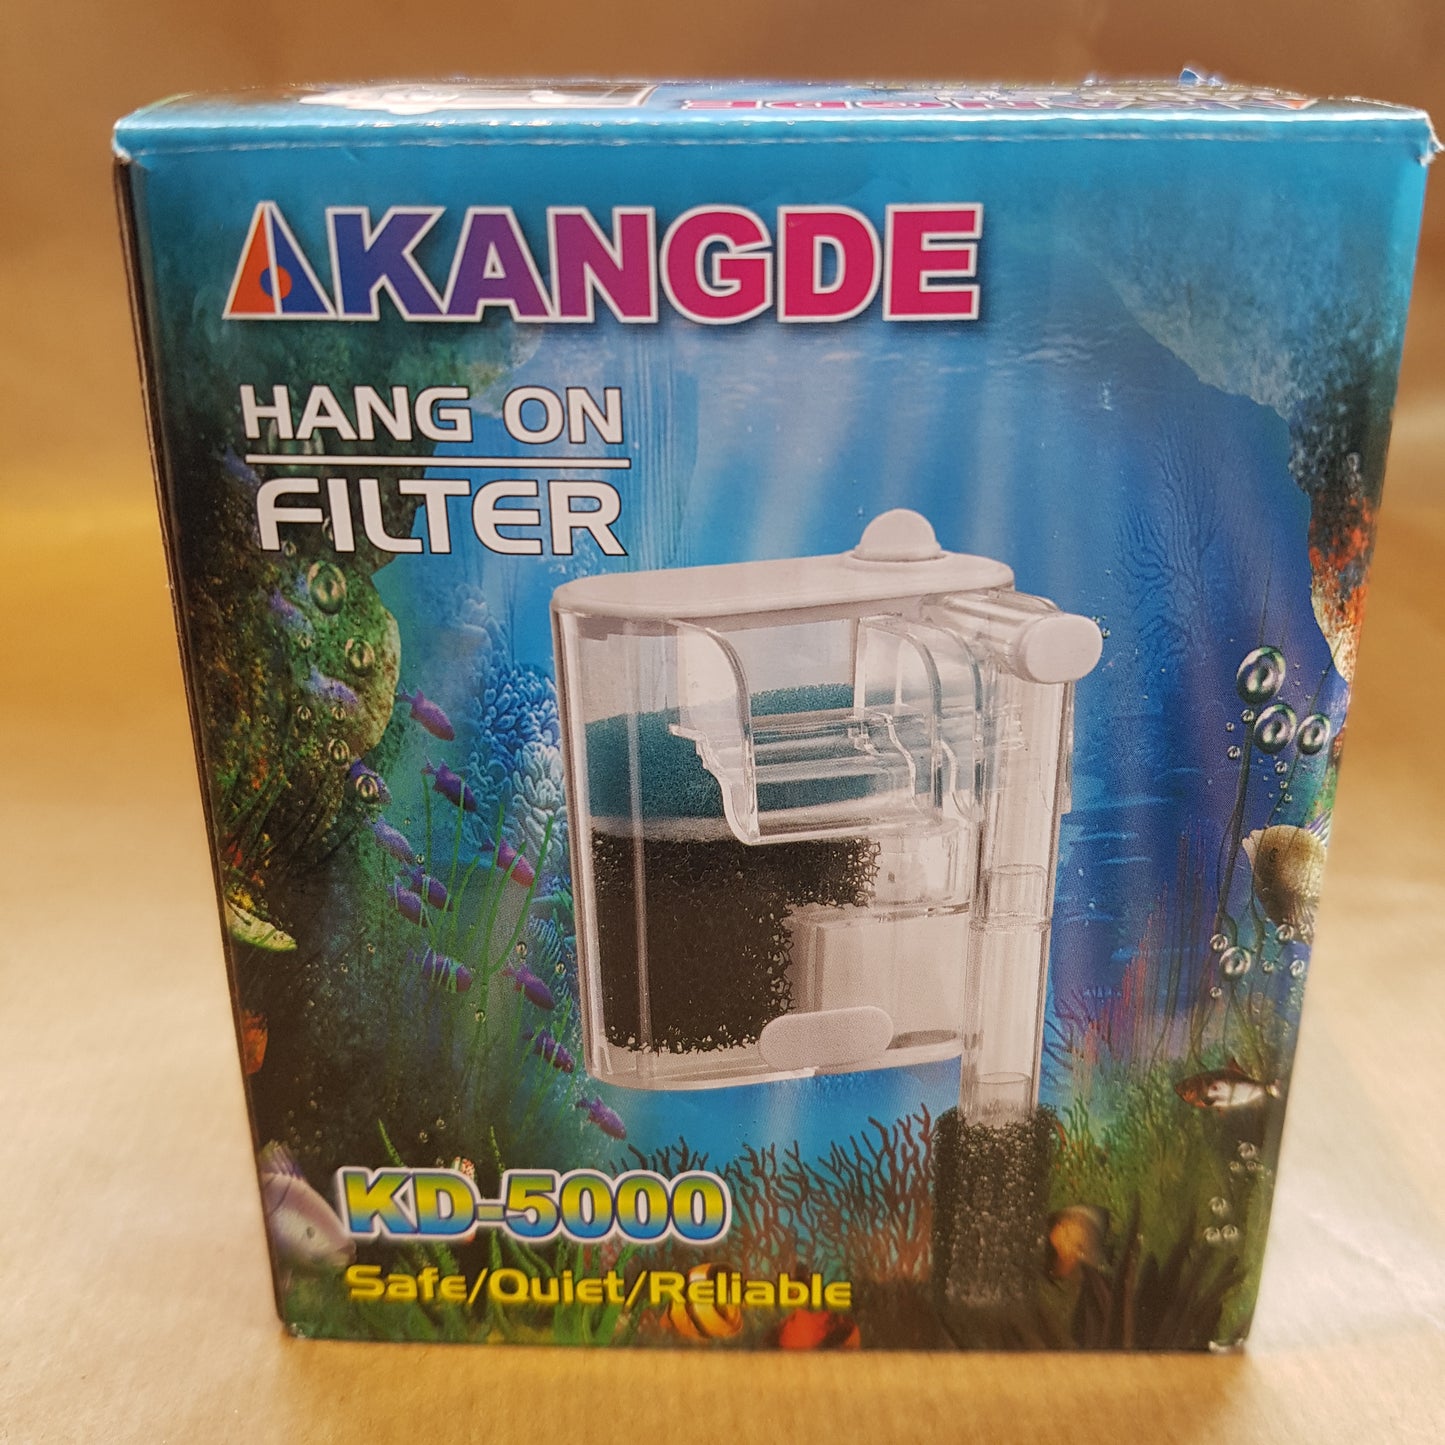 Hang on back filter - for small nano aquarium